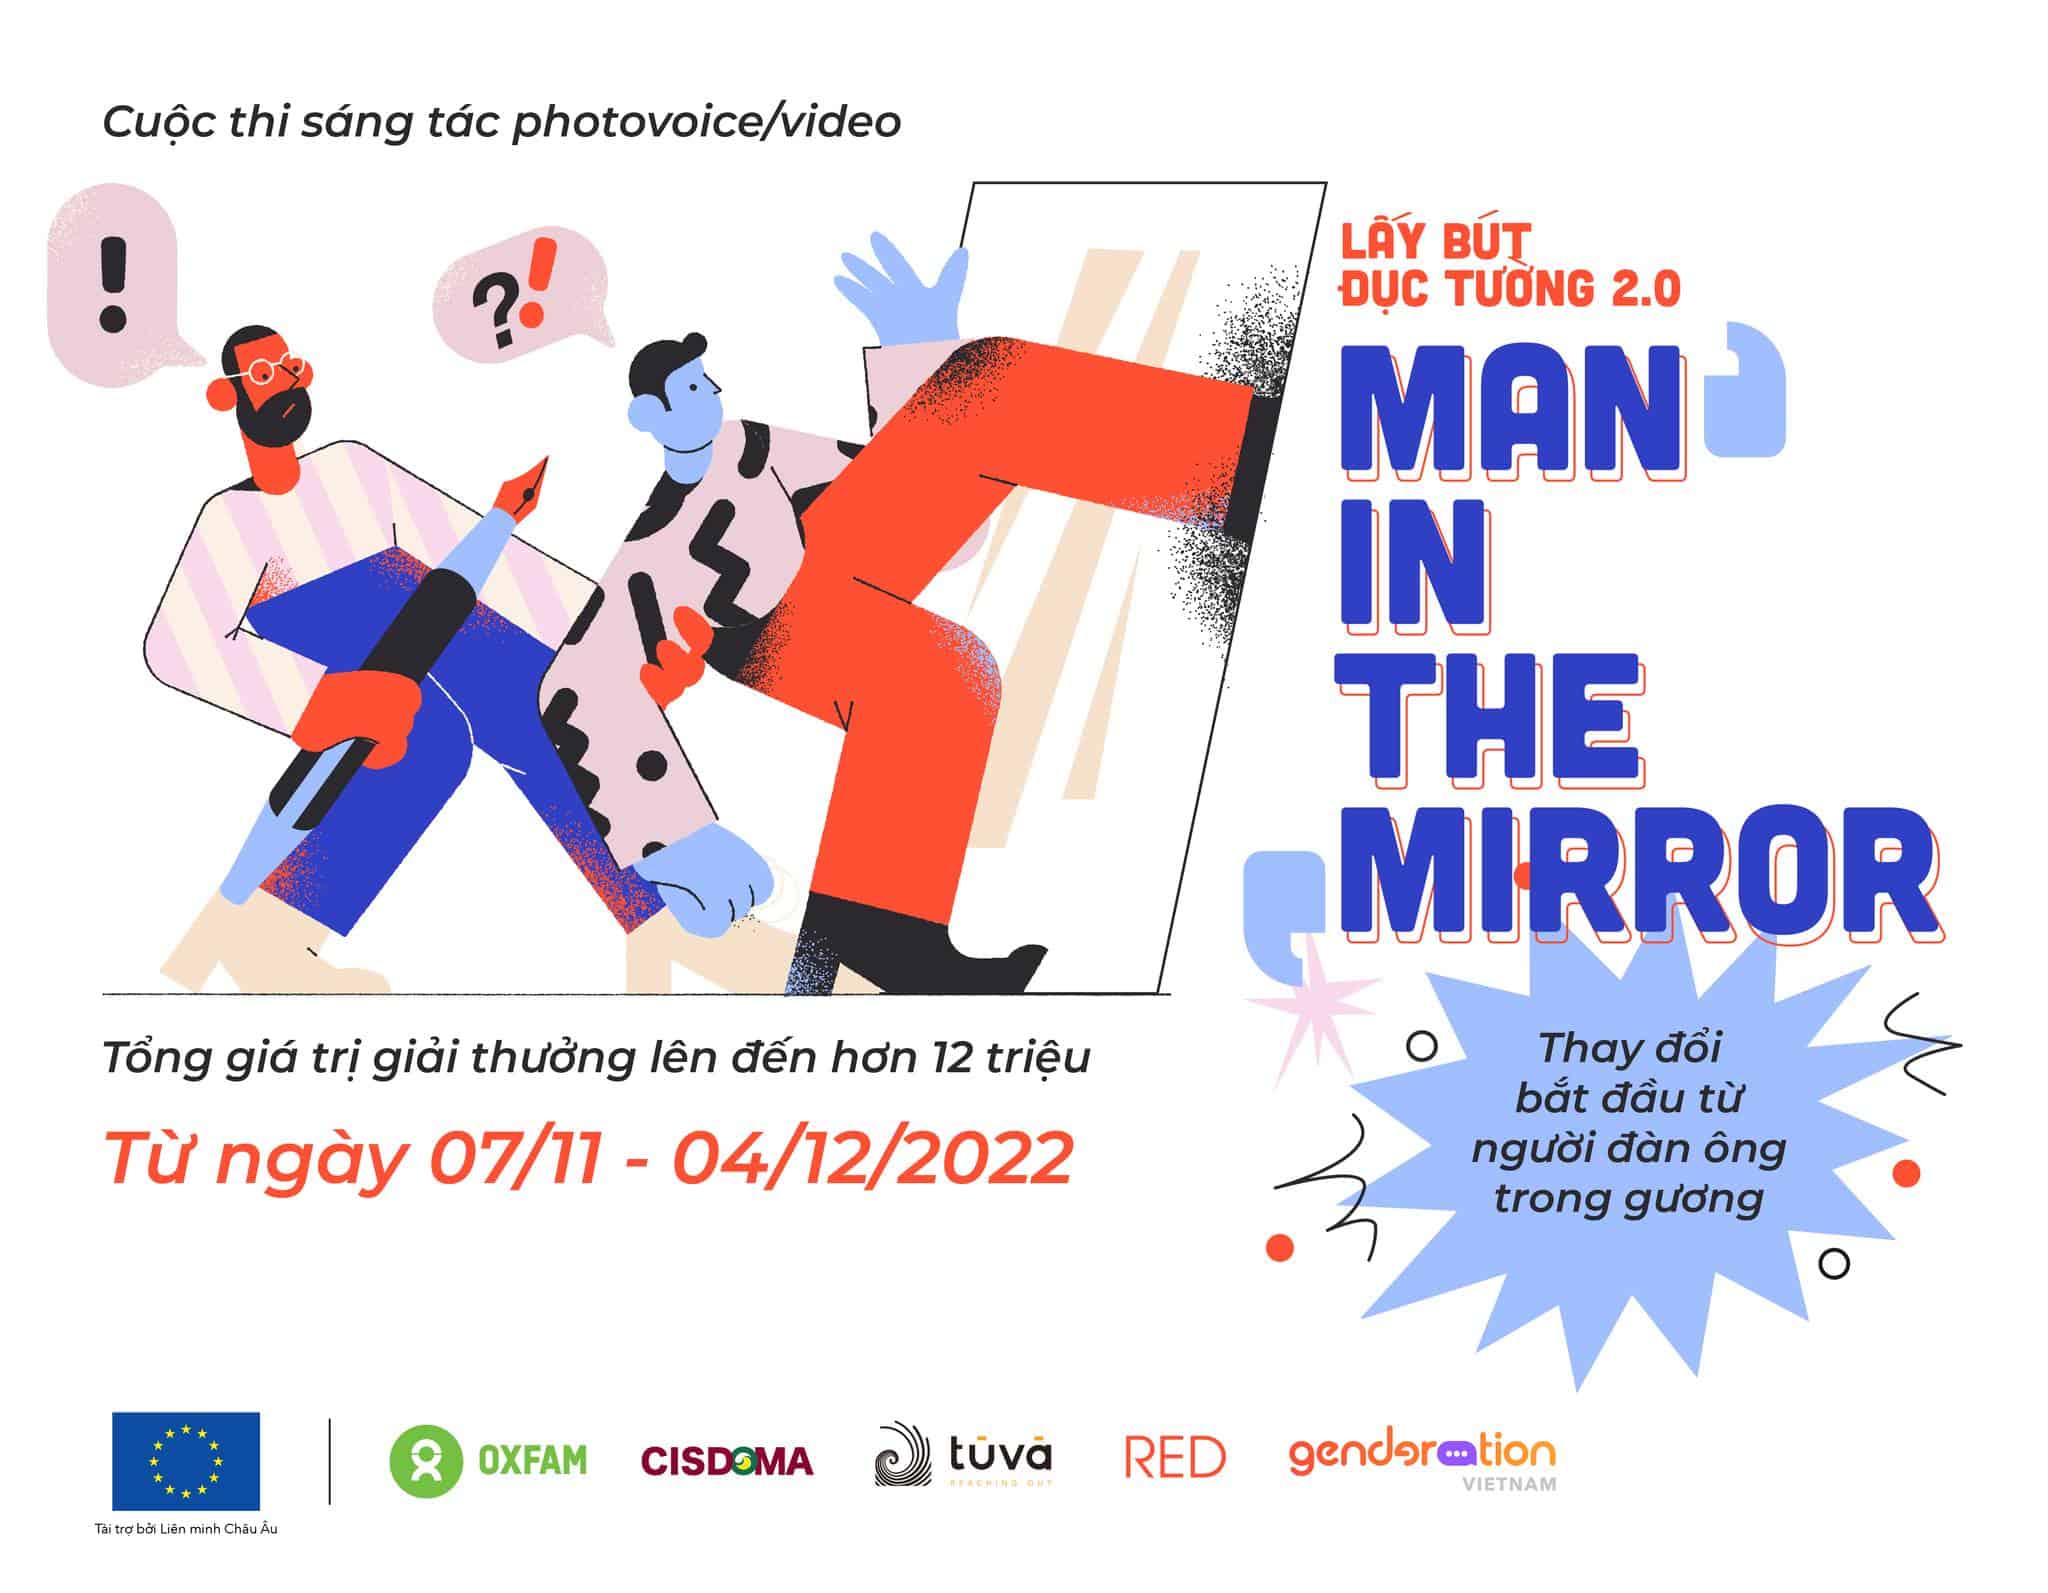 Read more about the article Cuộc thi sáng tác photovoice/video Lấy bút đục tường 2.0: “Man in the mirror”